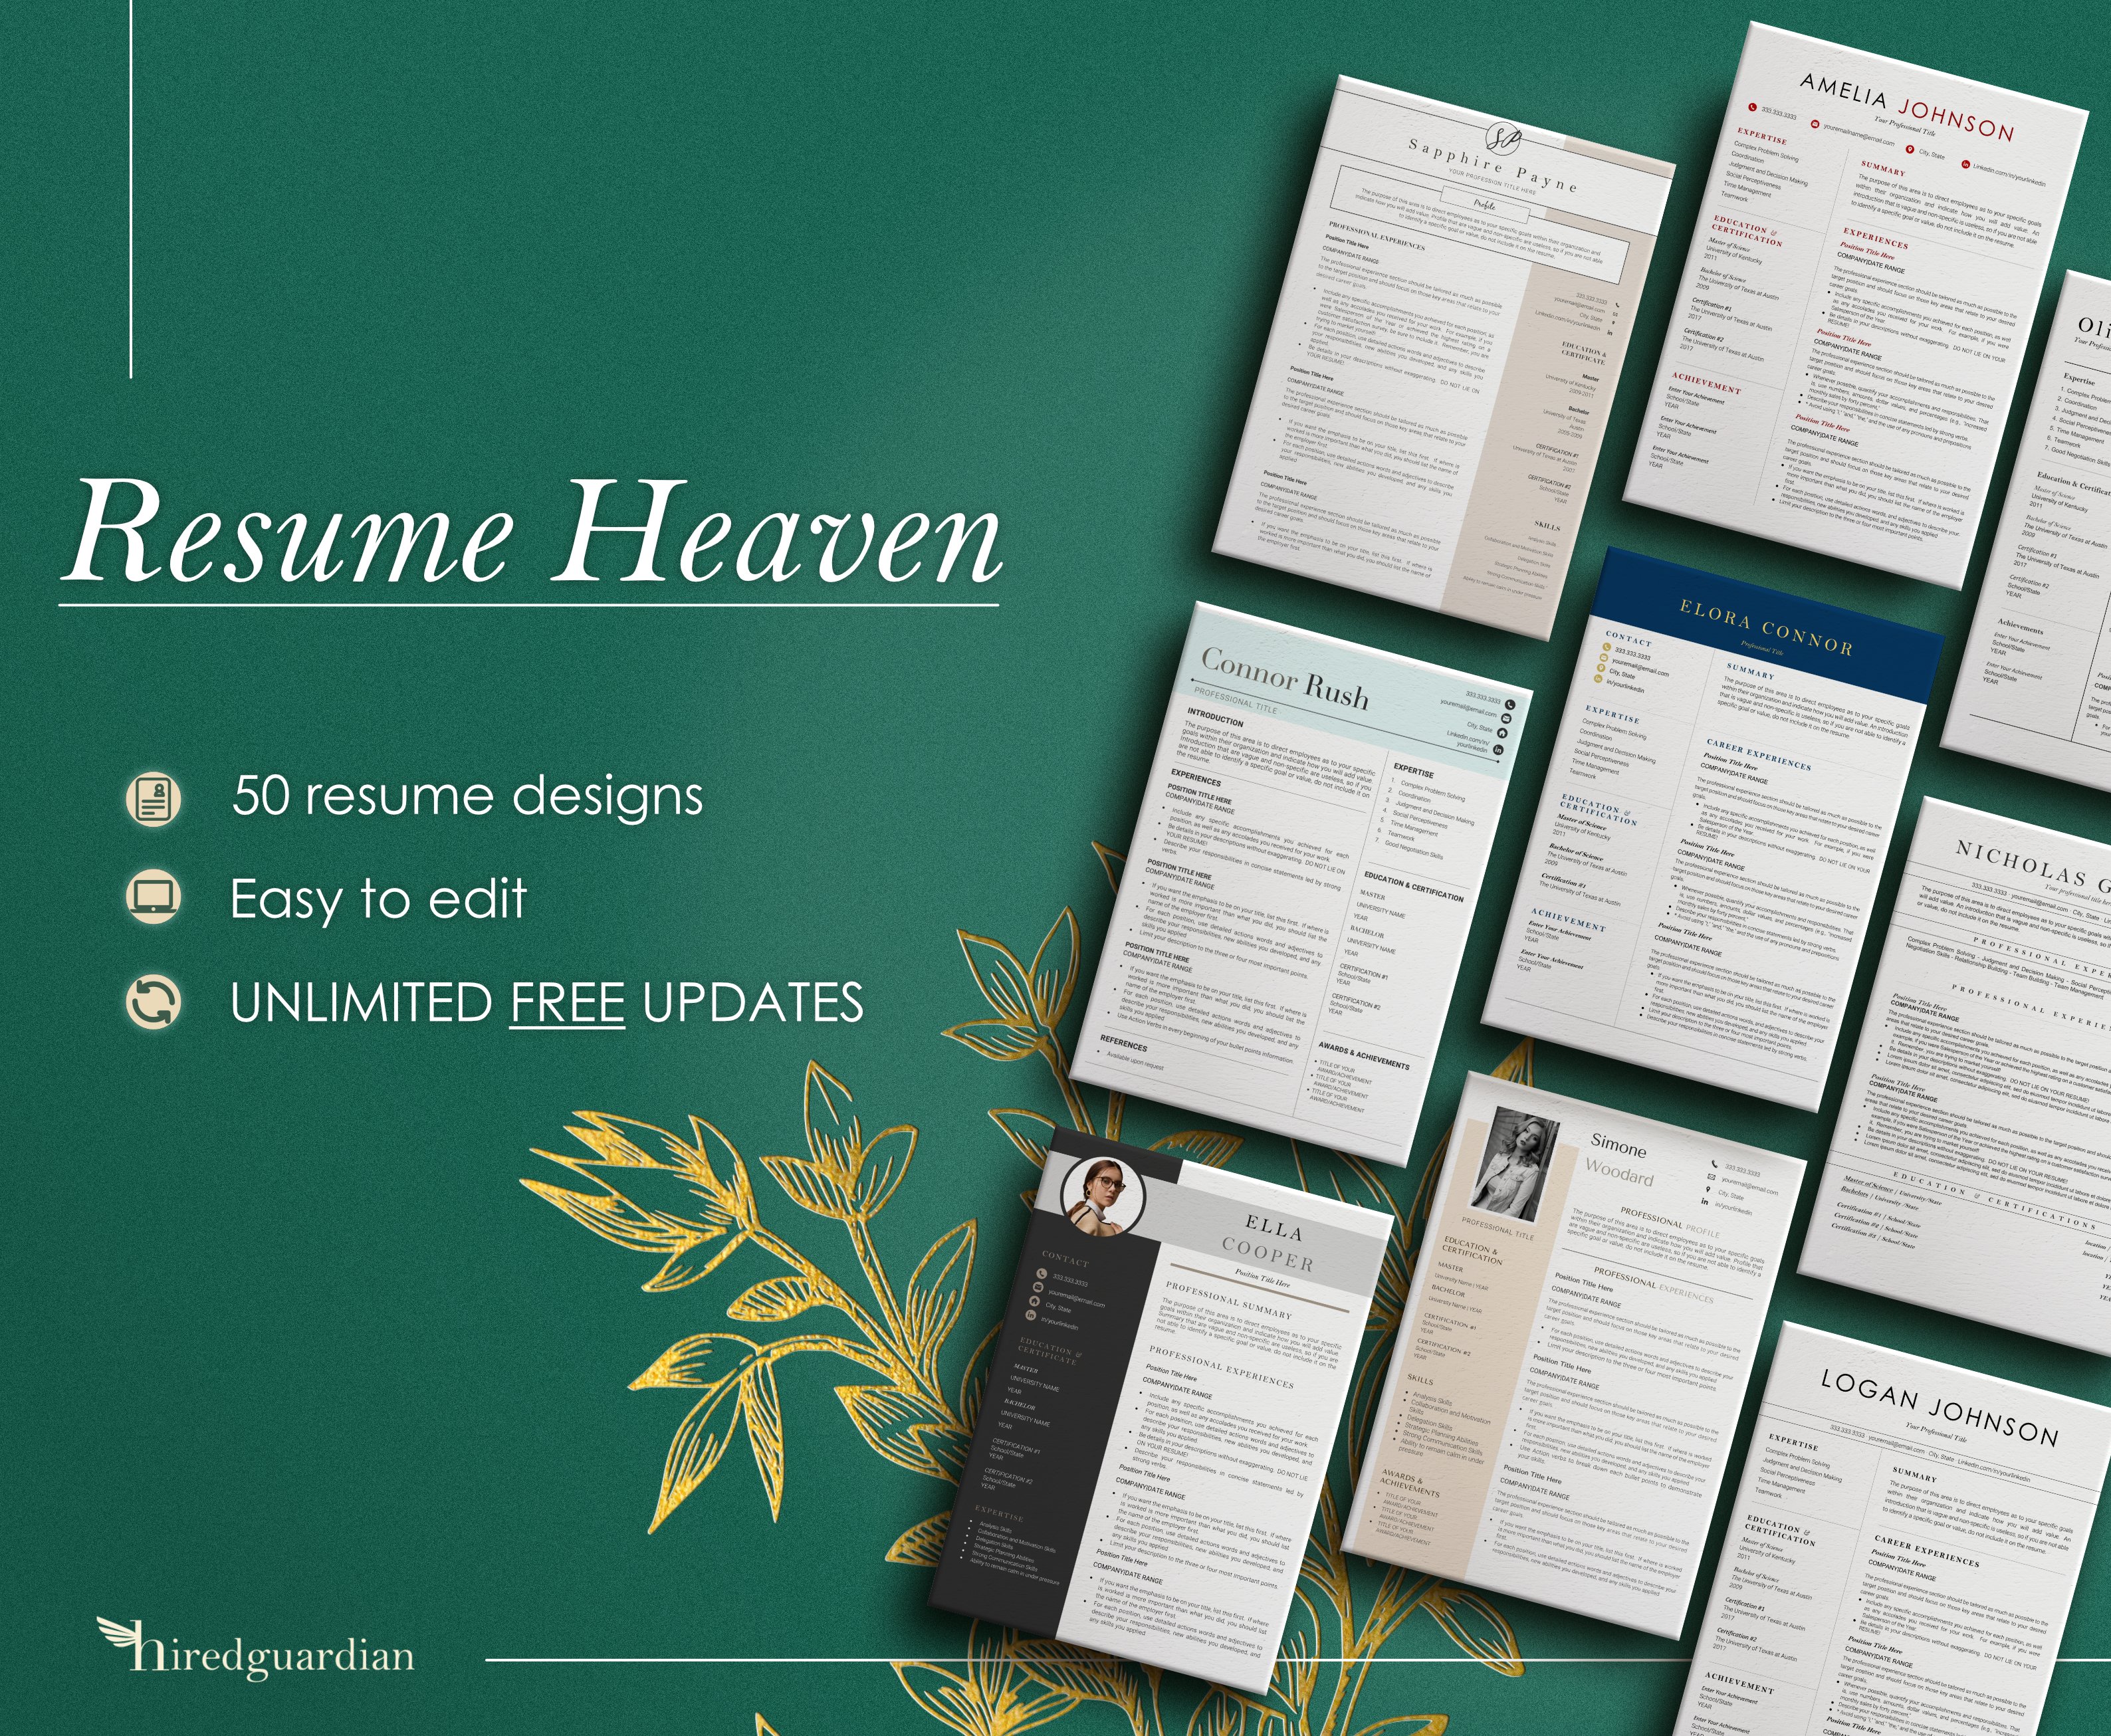 RESUME HEAVEN - 50 Resume Bundle cover image.